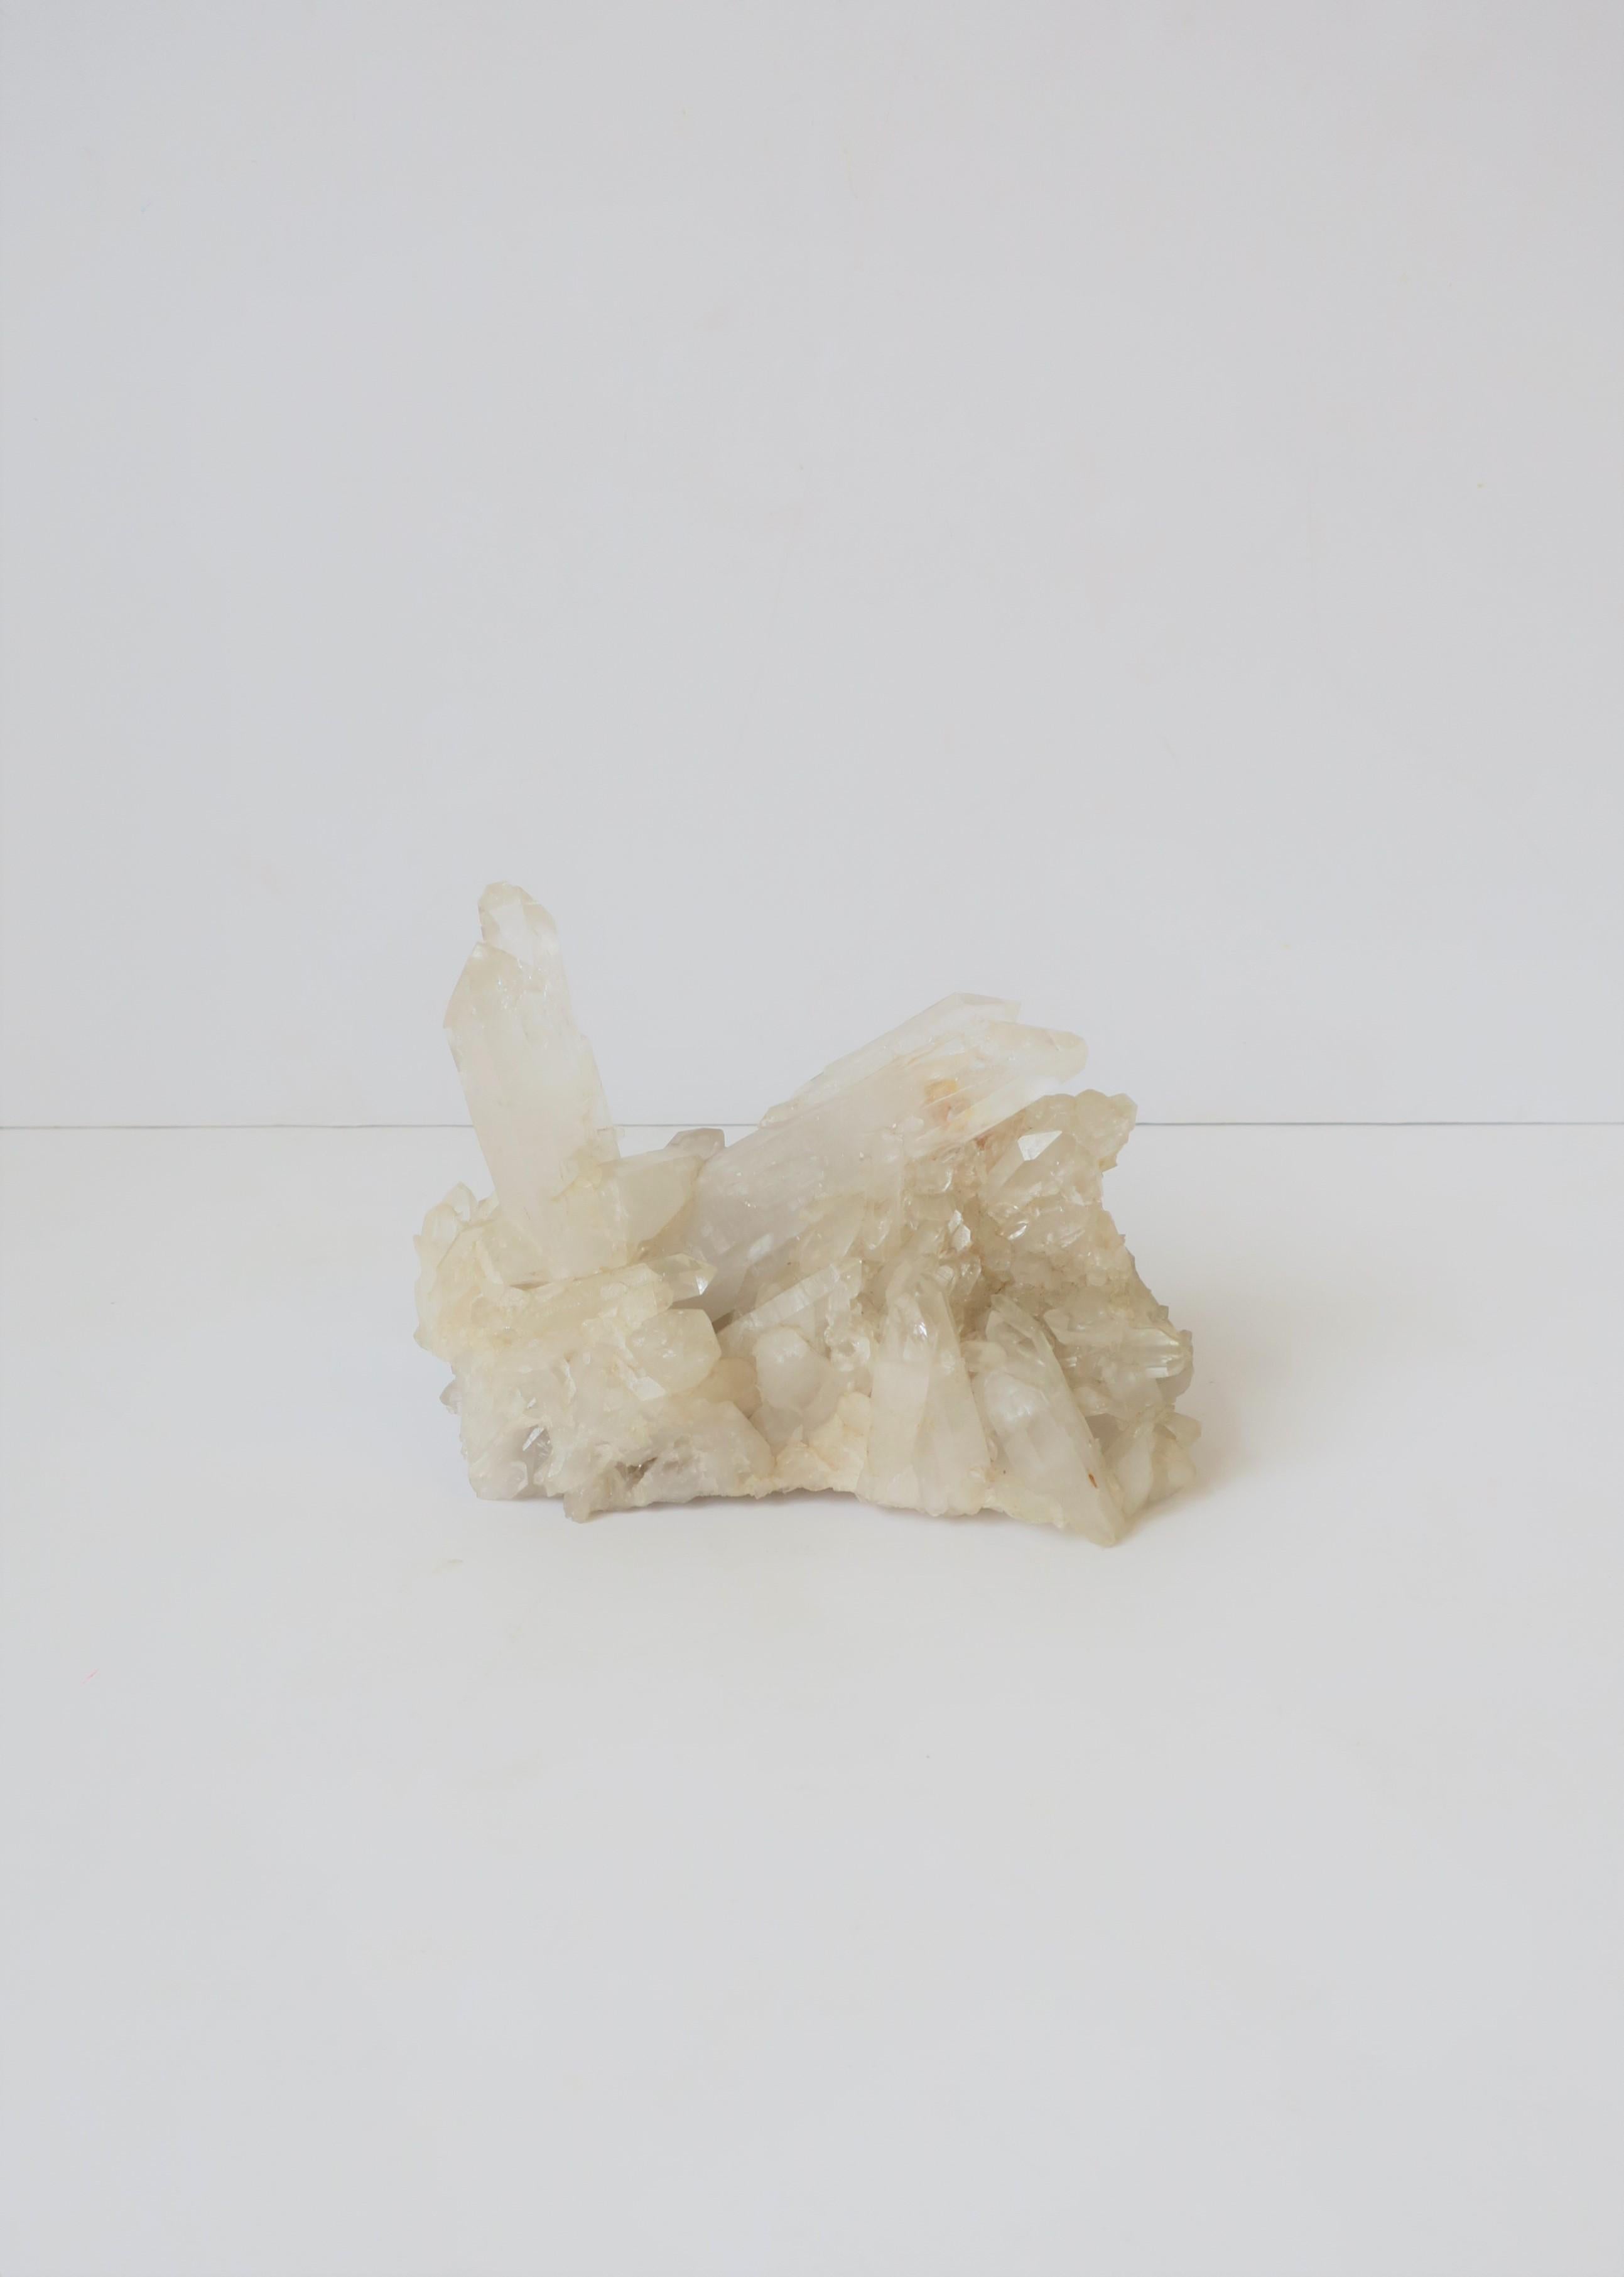 20th Century Natural Rock Crystal Specimen Piece